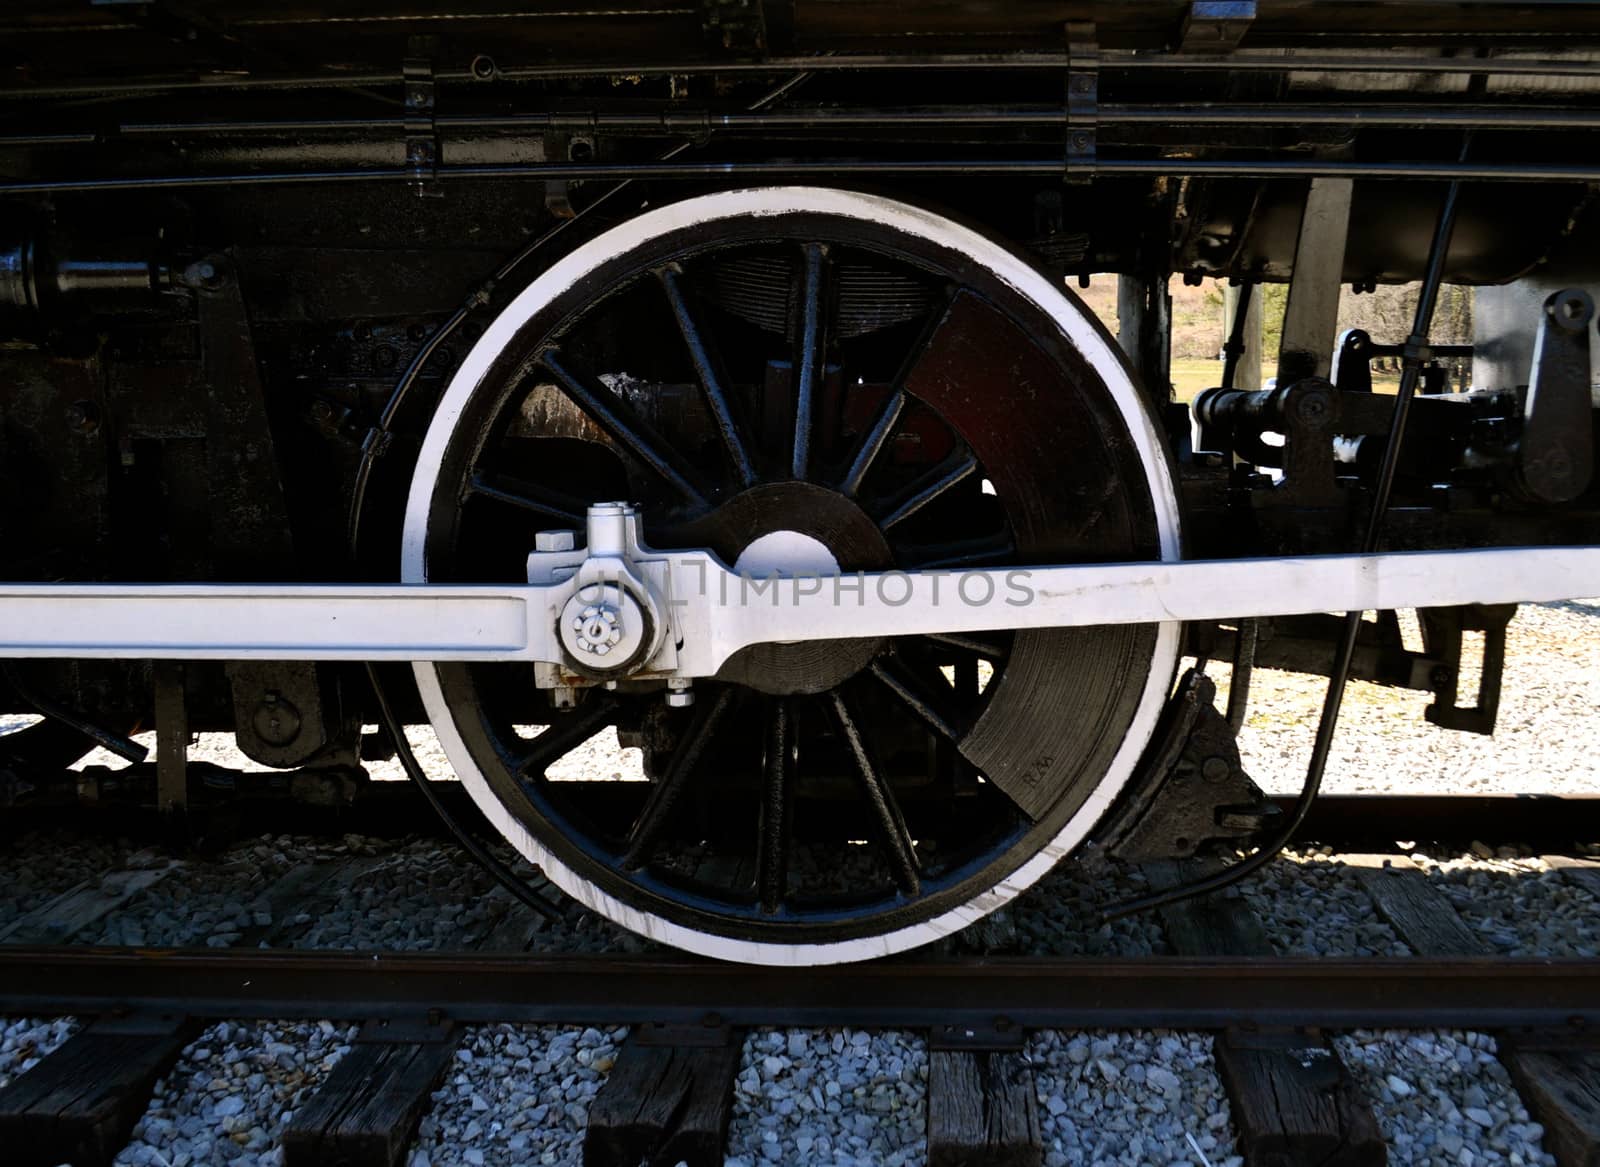 Locomotive Wheel
